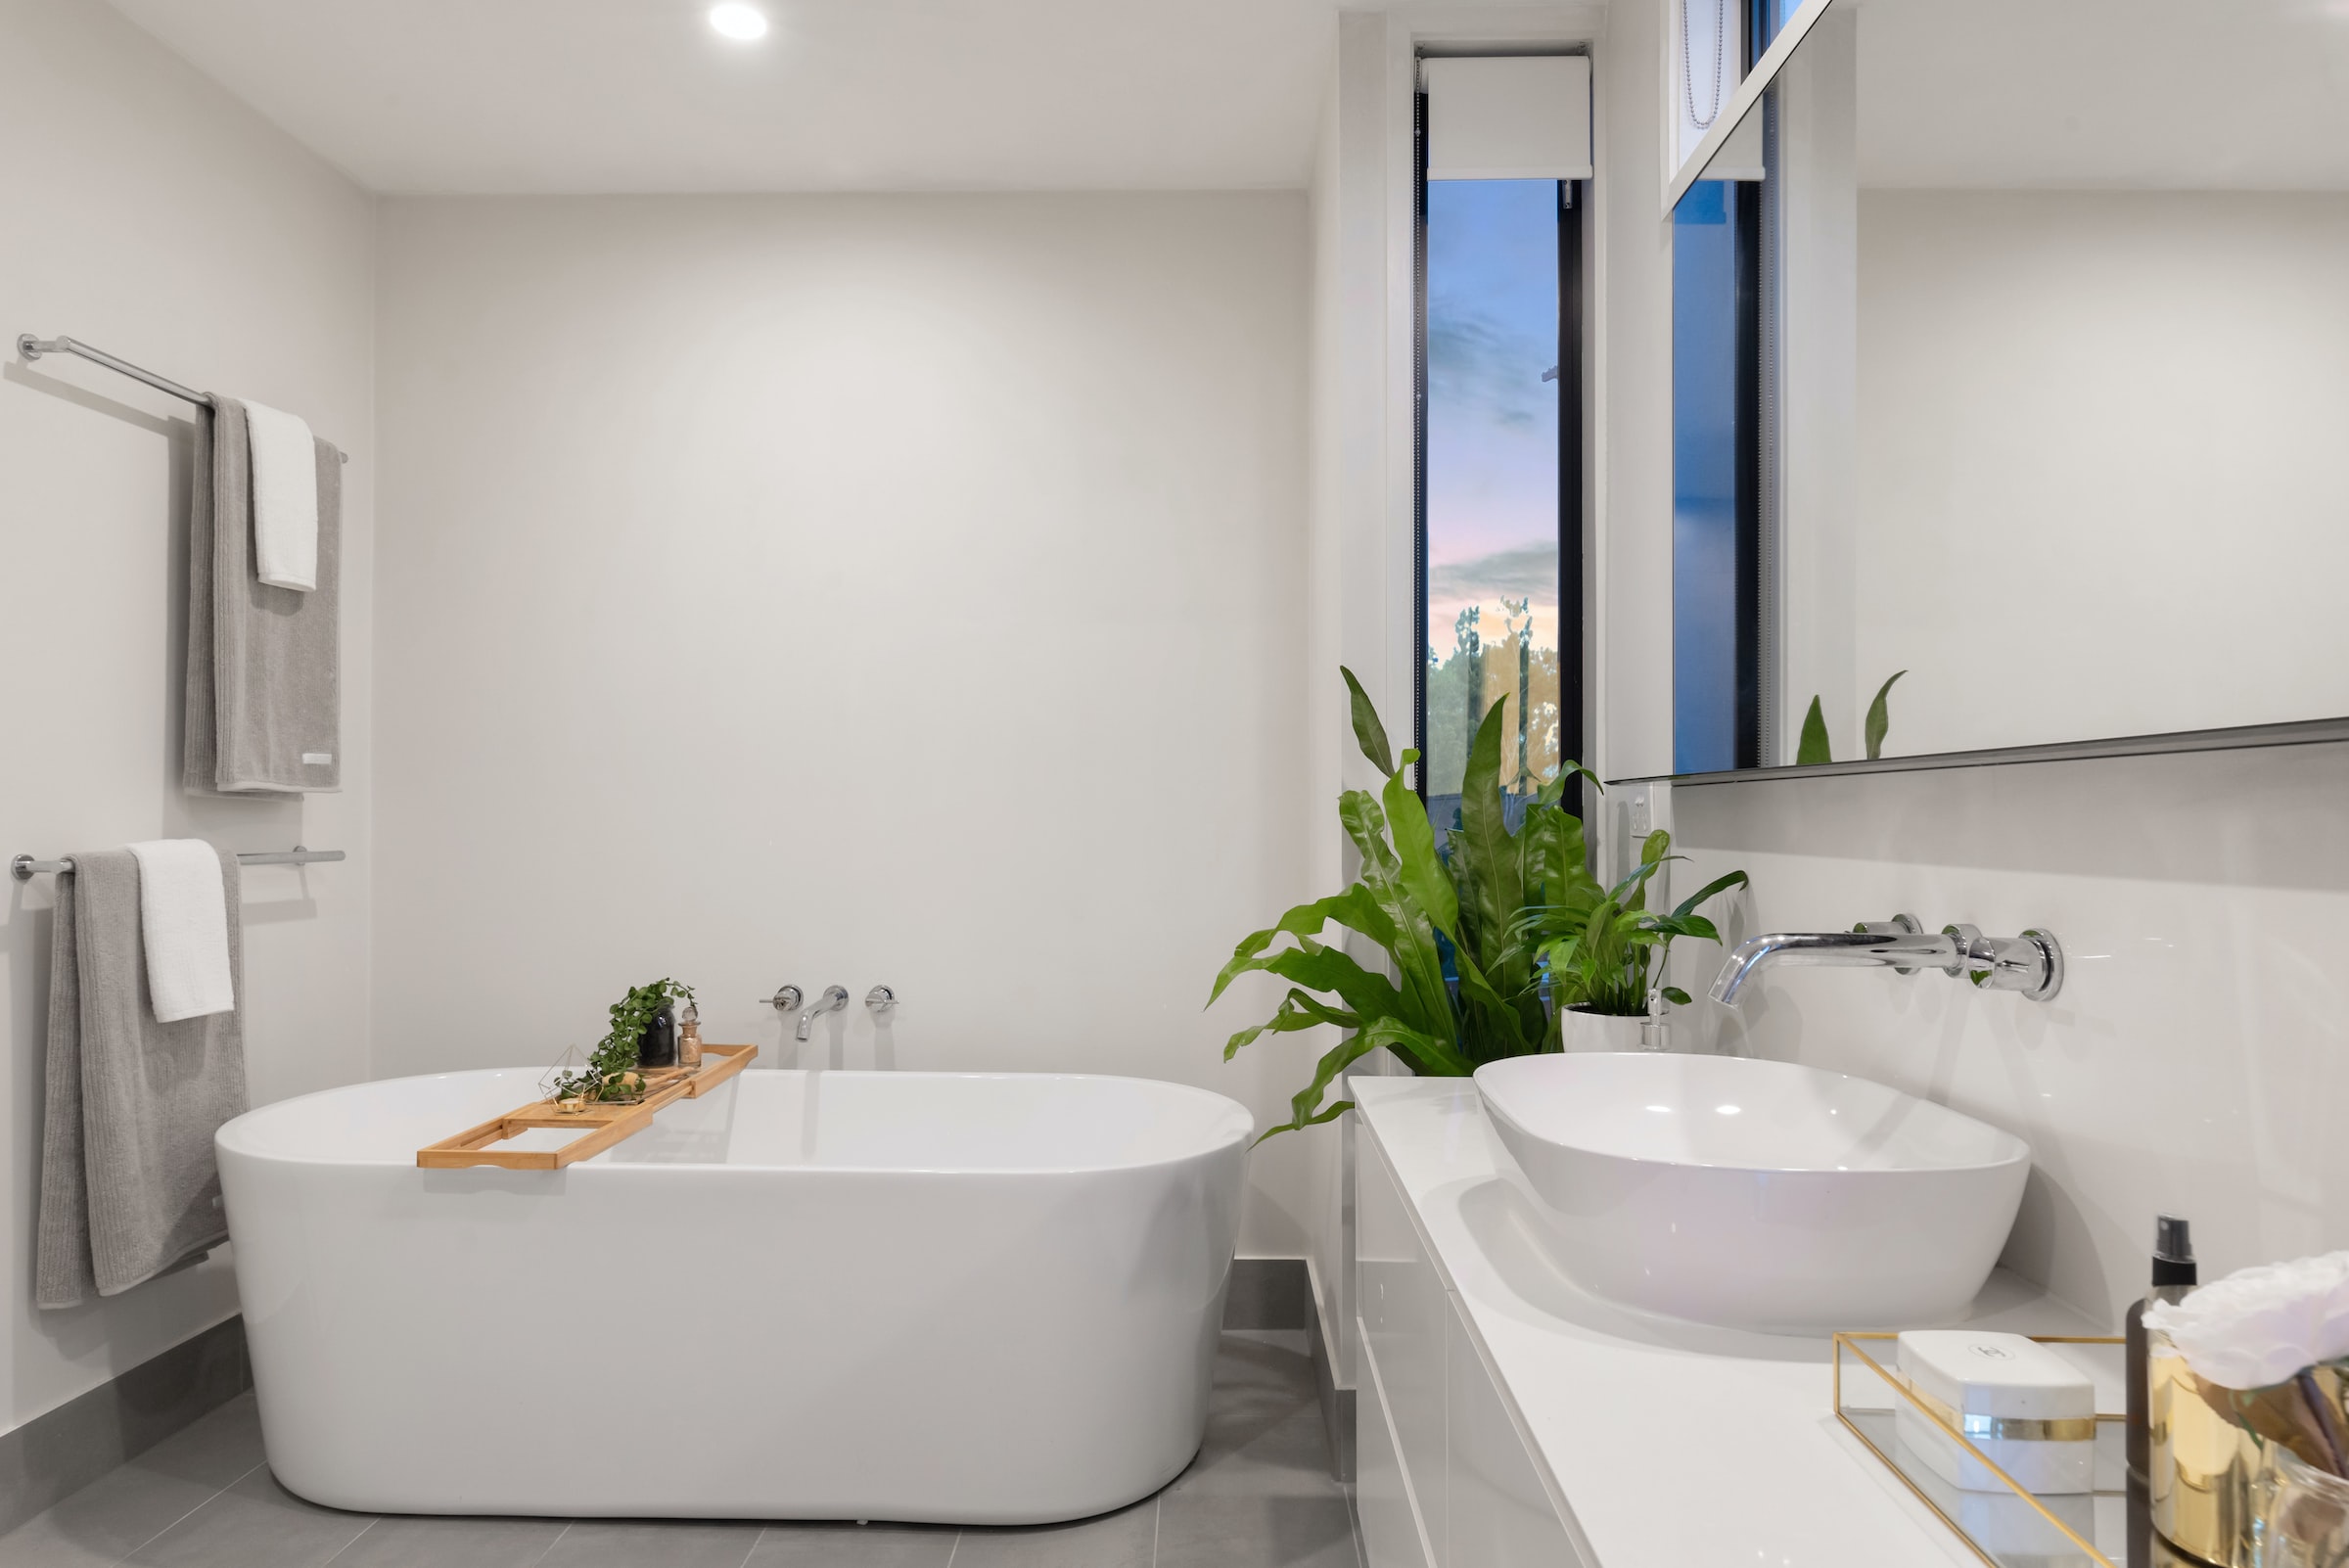 Bathroom Renovations Brisbane